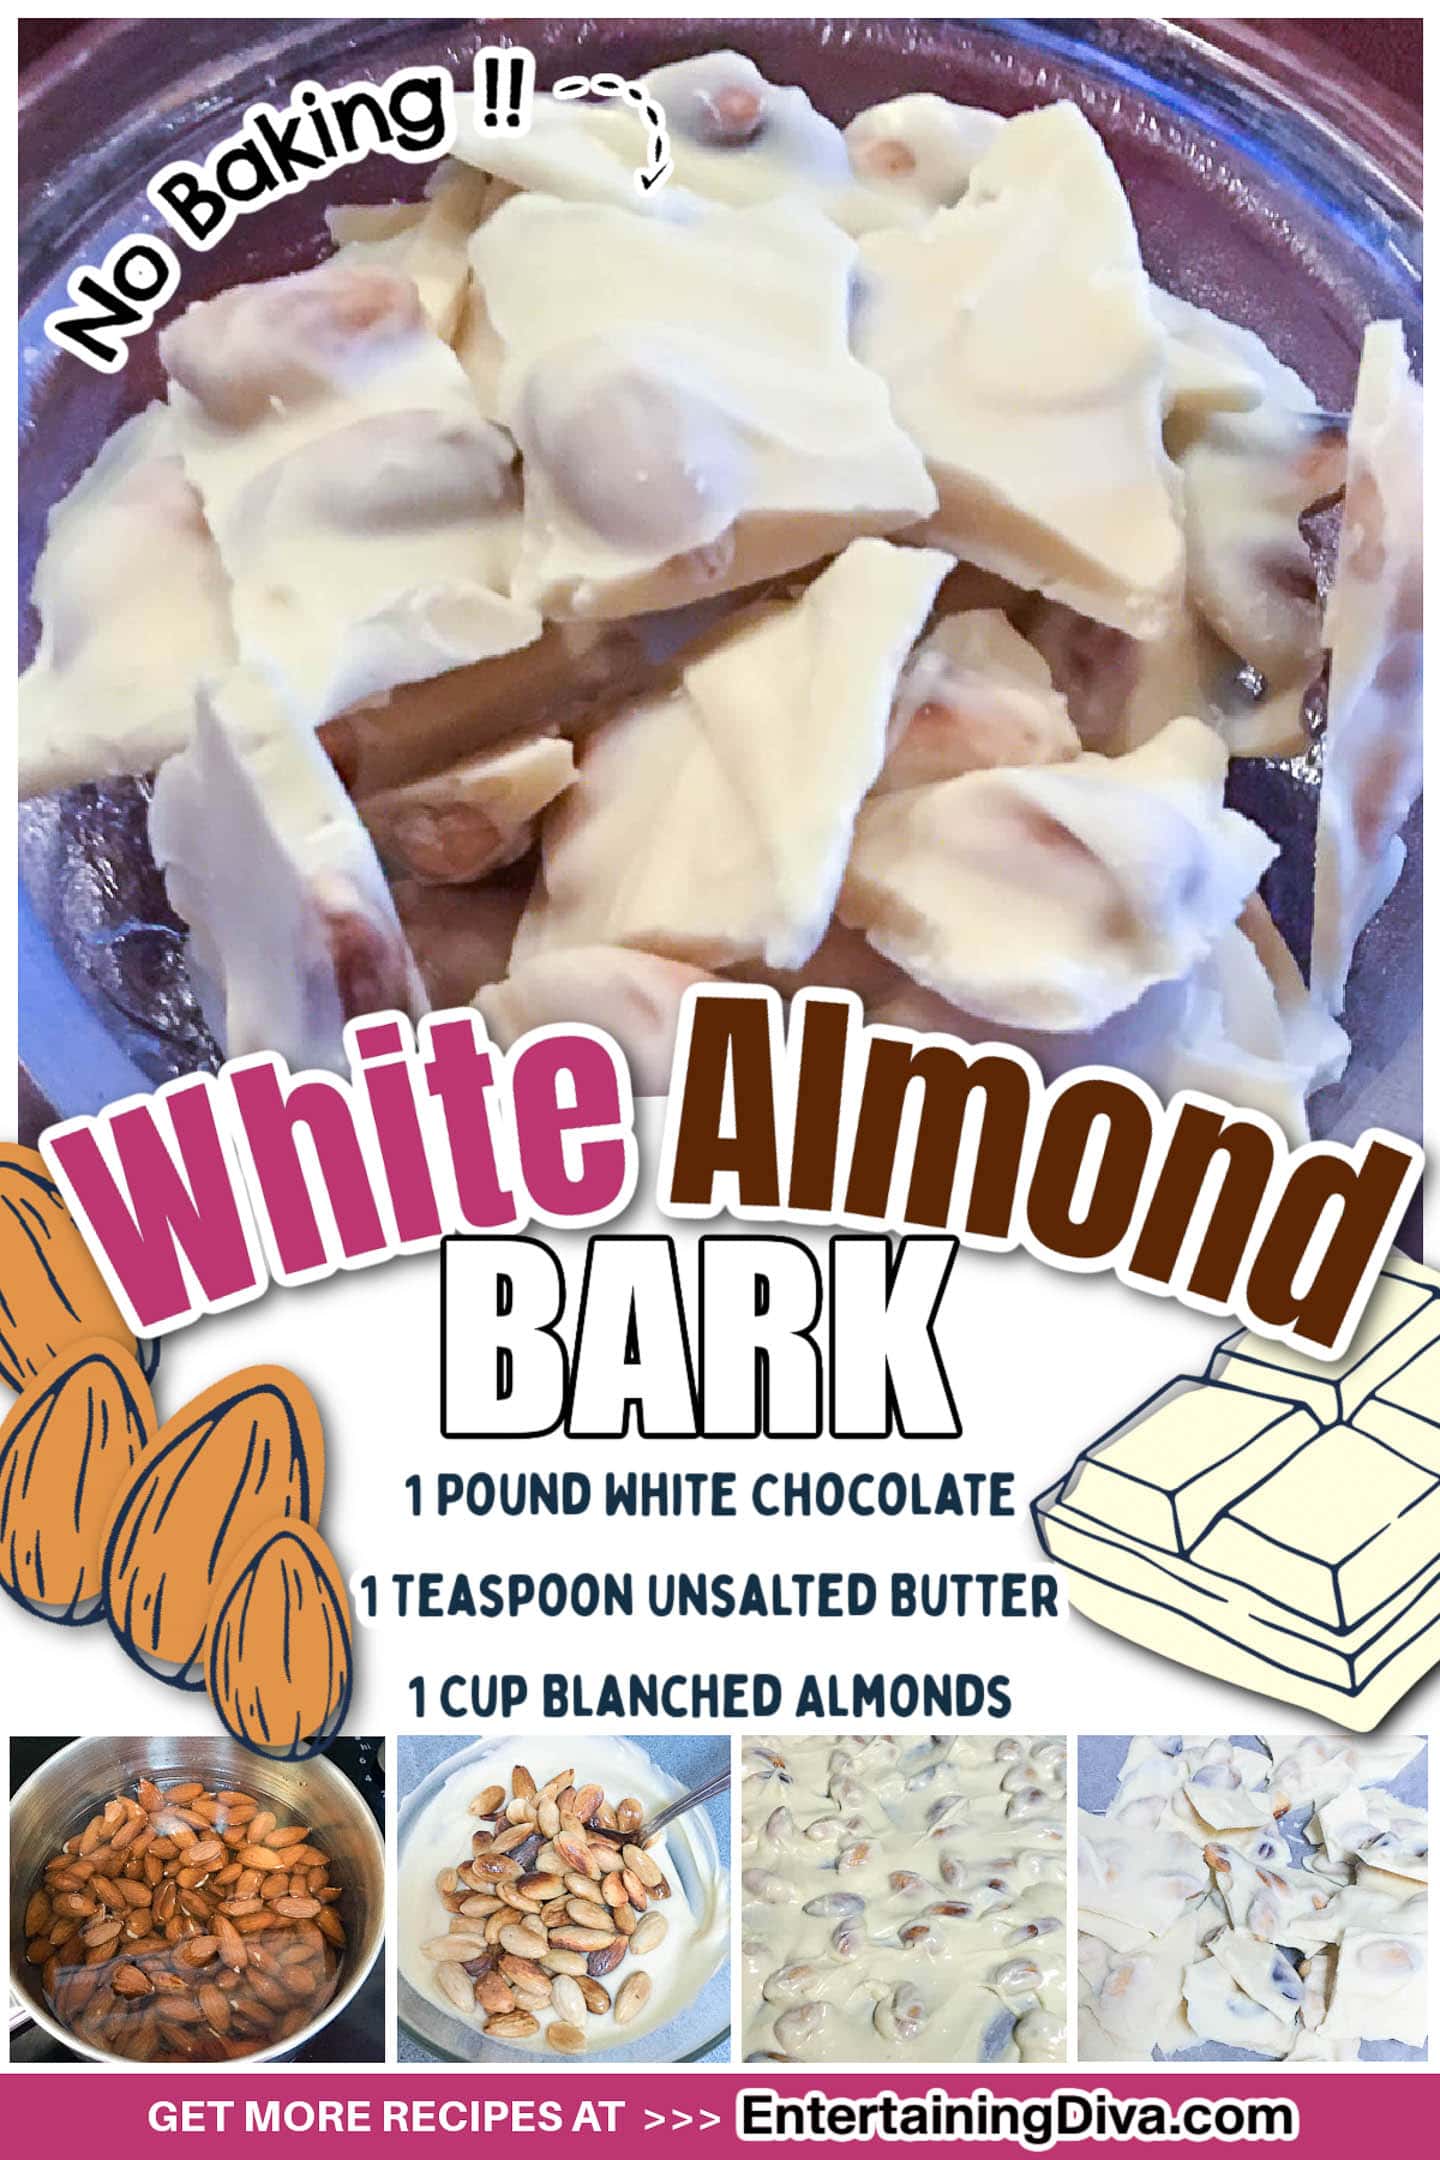 White almond bark